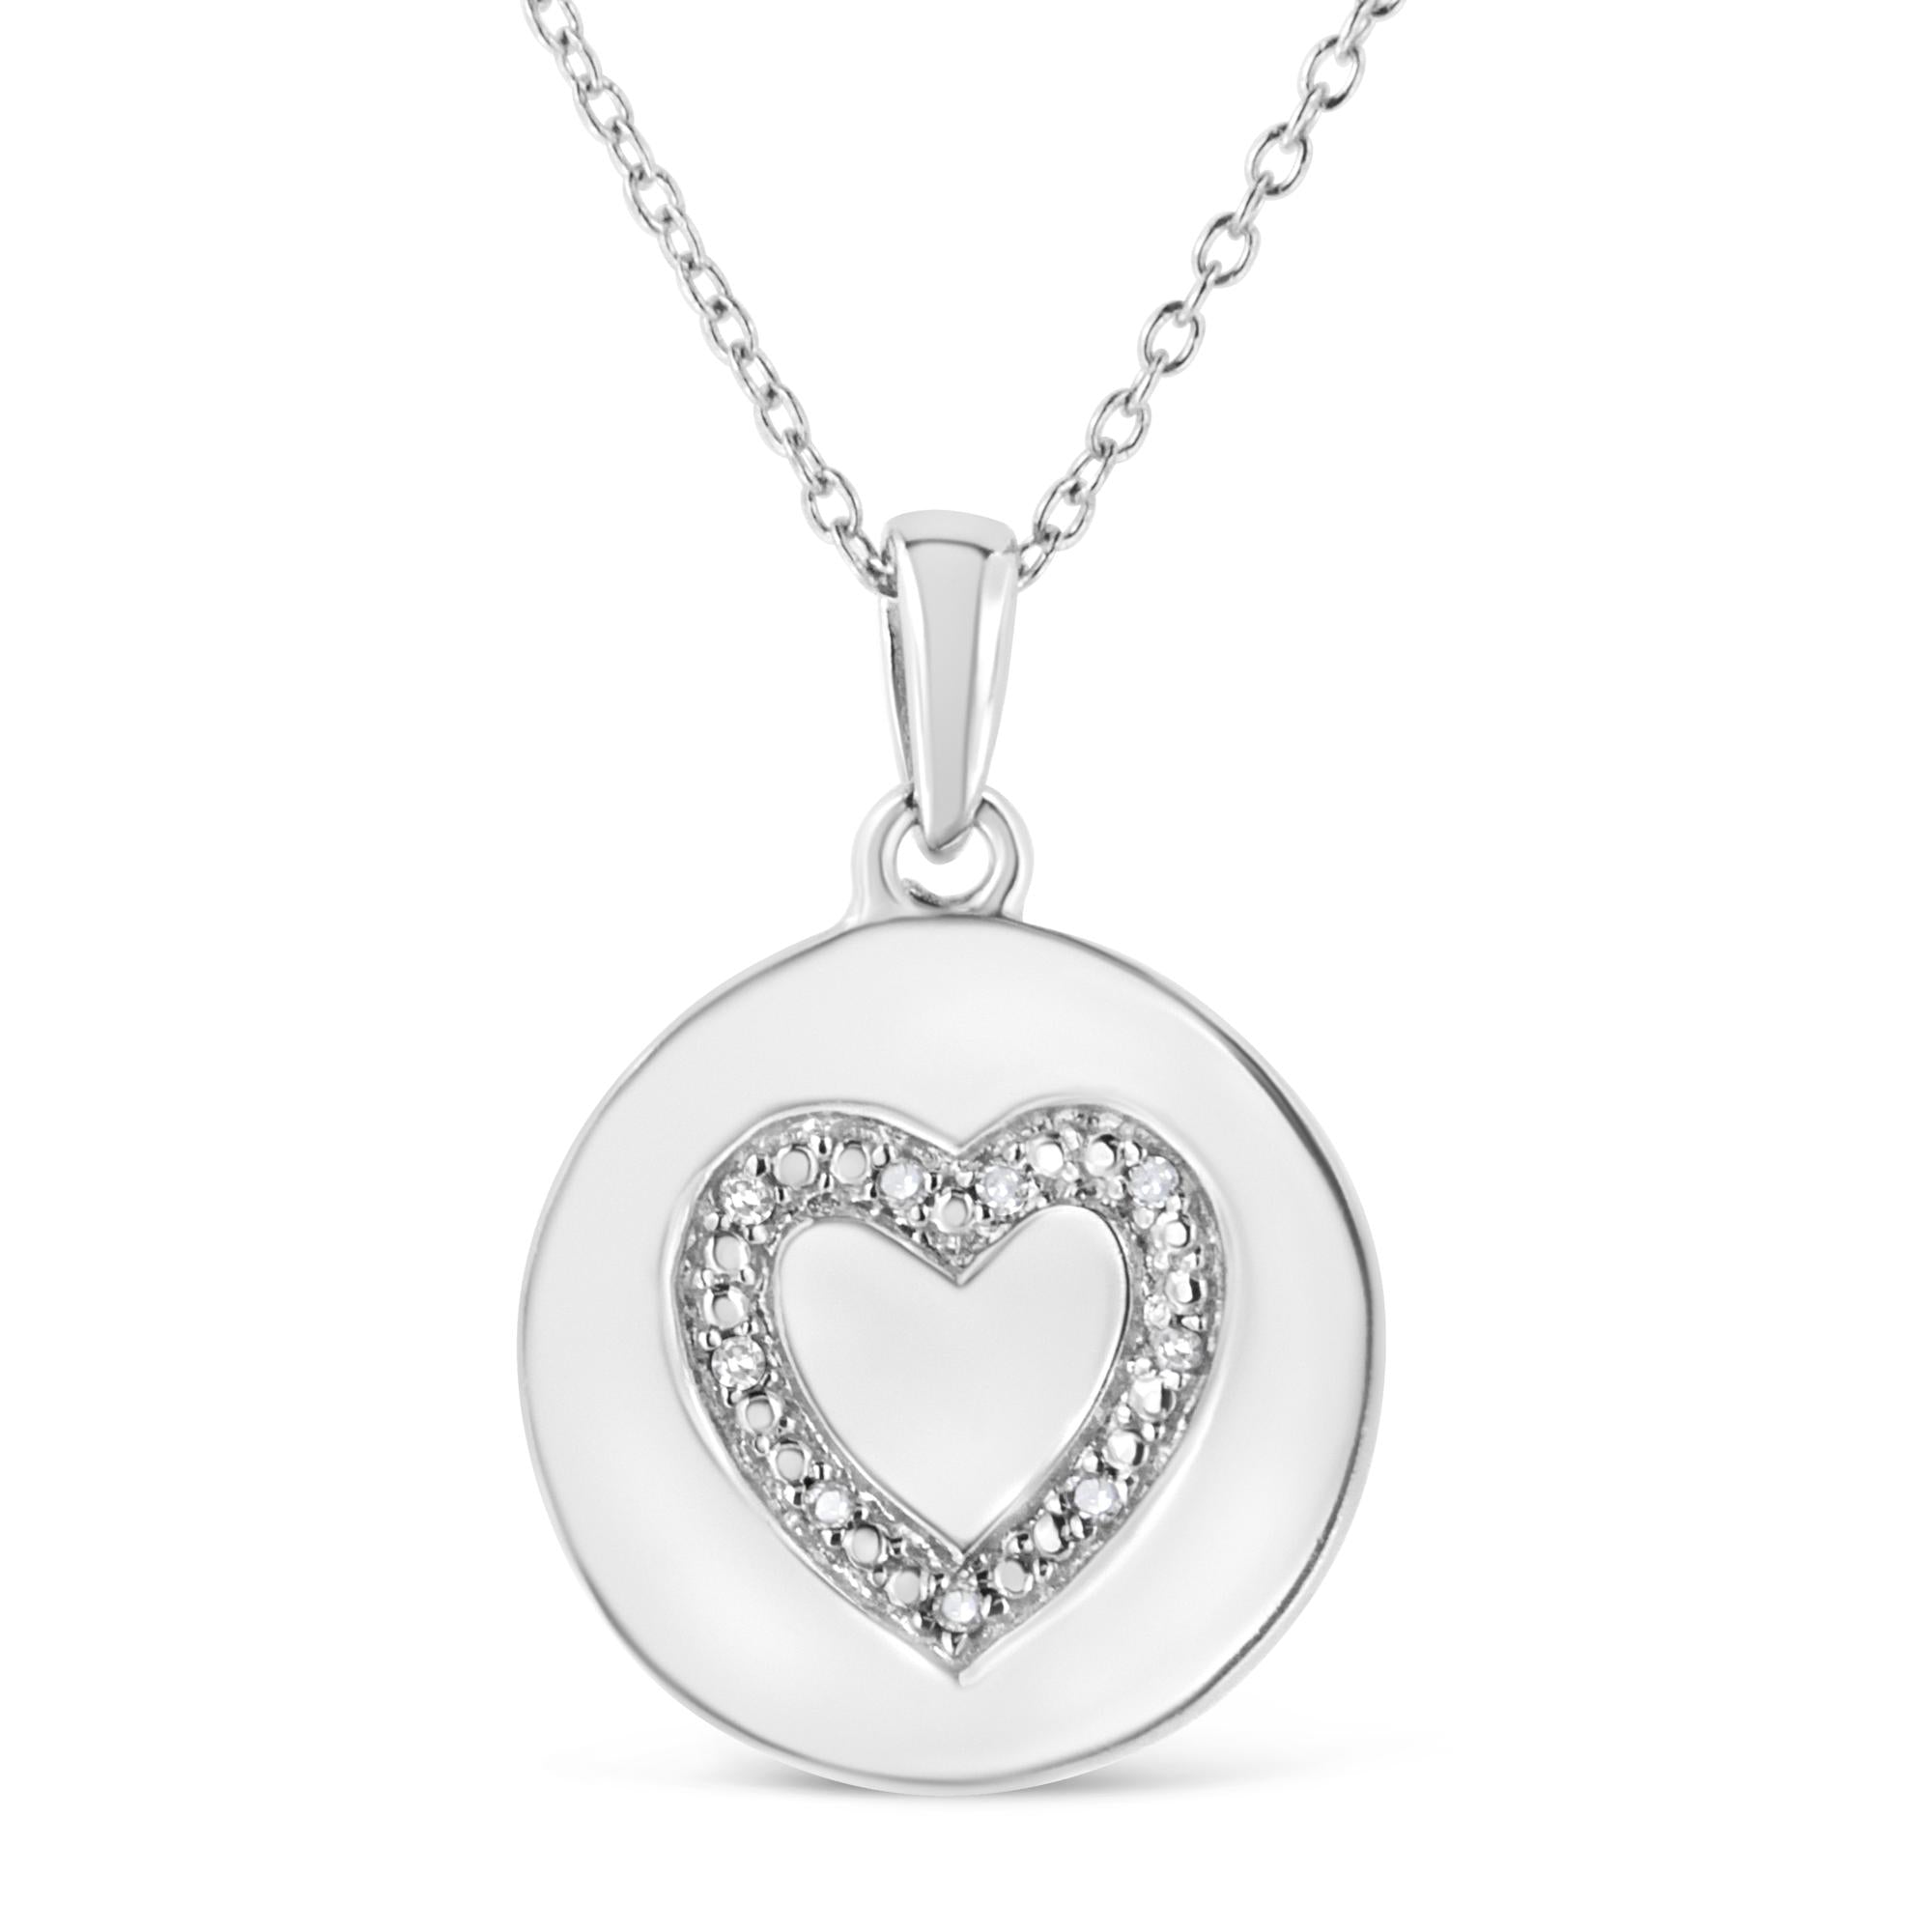 ''.925 Sterling Silver Prong-Set Diamond Accent Heart Emblemed 18'''' Pendant Necklace (I-J Color, I1-I